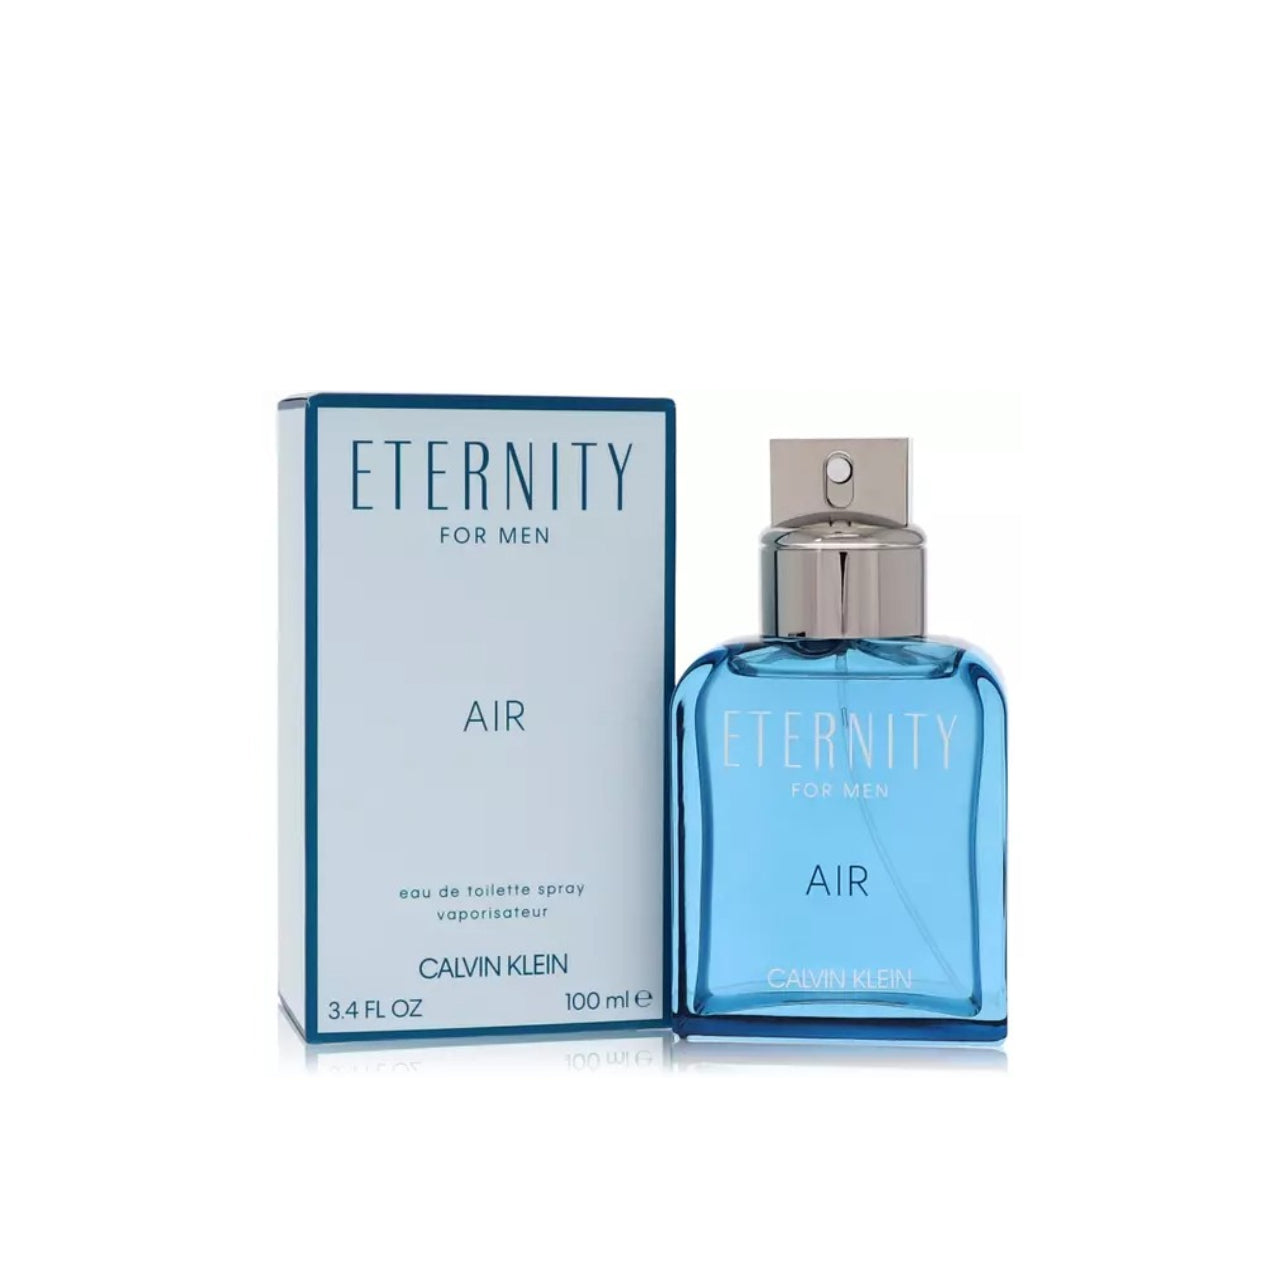 Eternity Air Cologne Perfume for Men